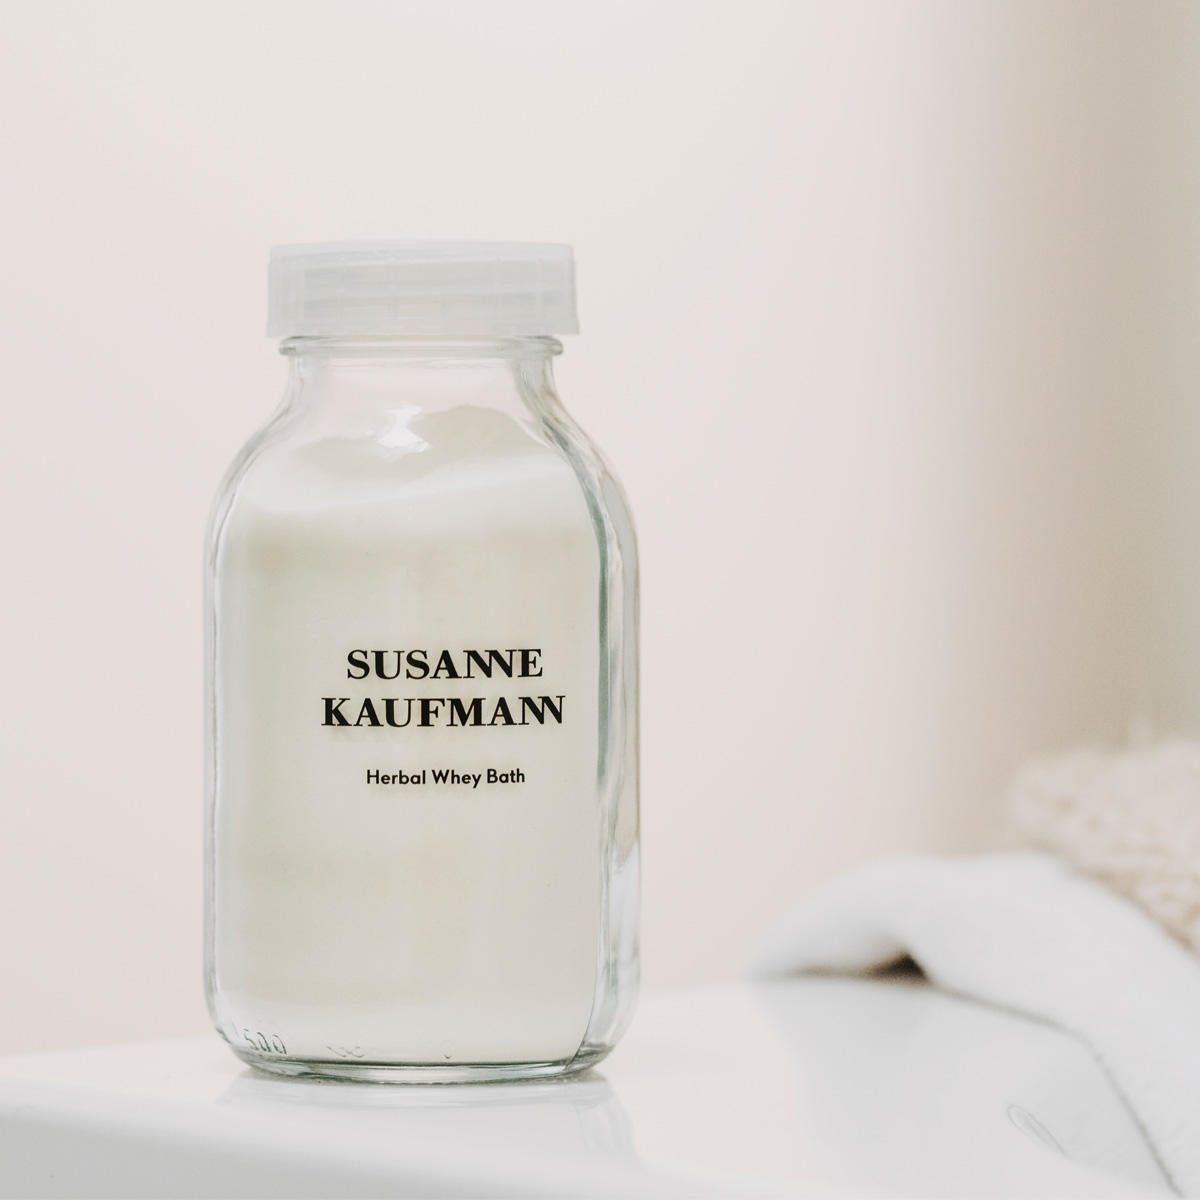 Susanne Kaufmann Herbal whey bath nourishing 300 g - 2